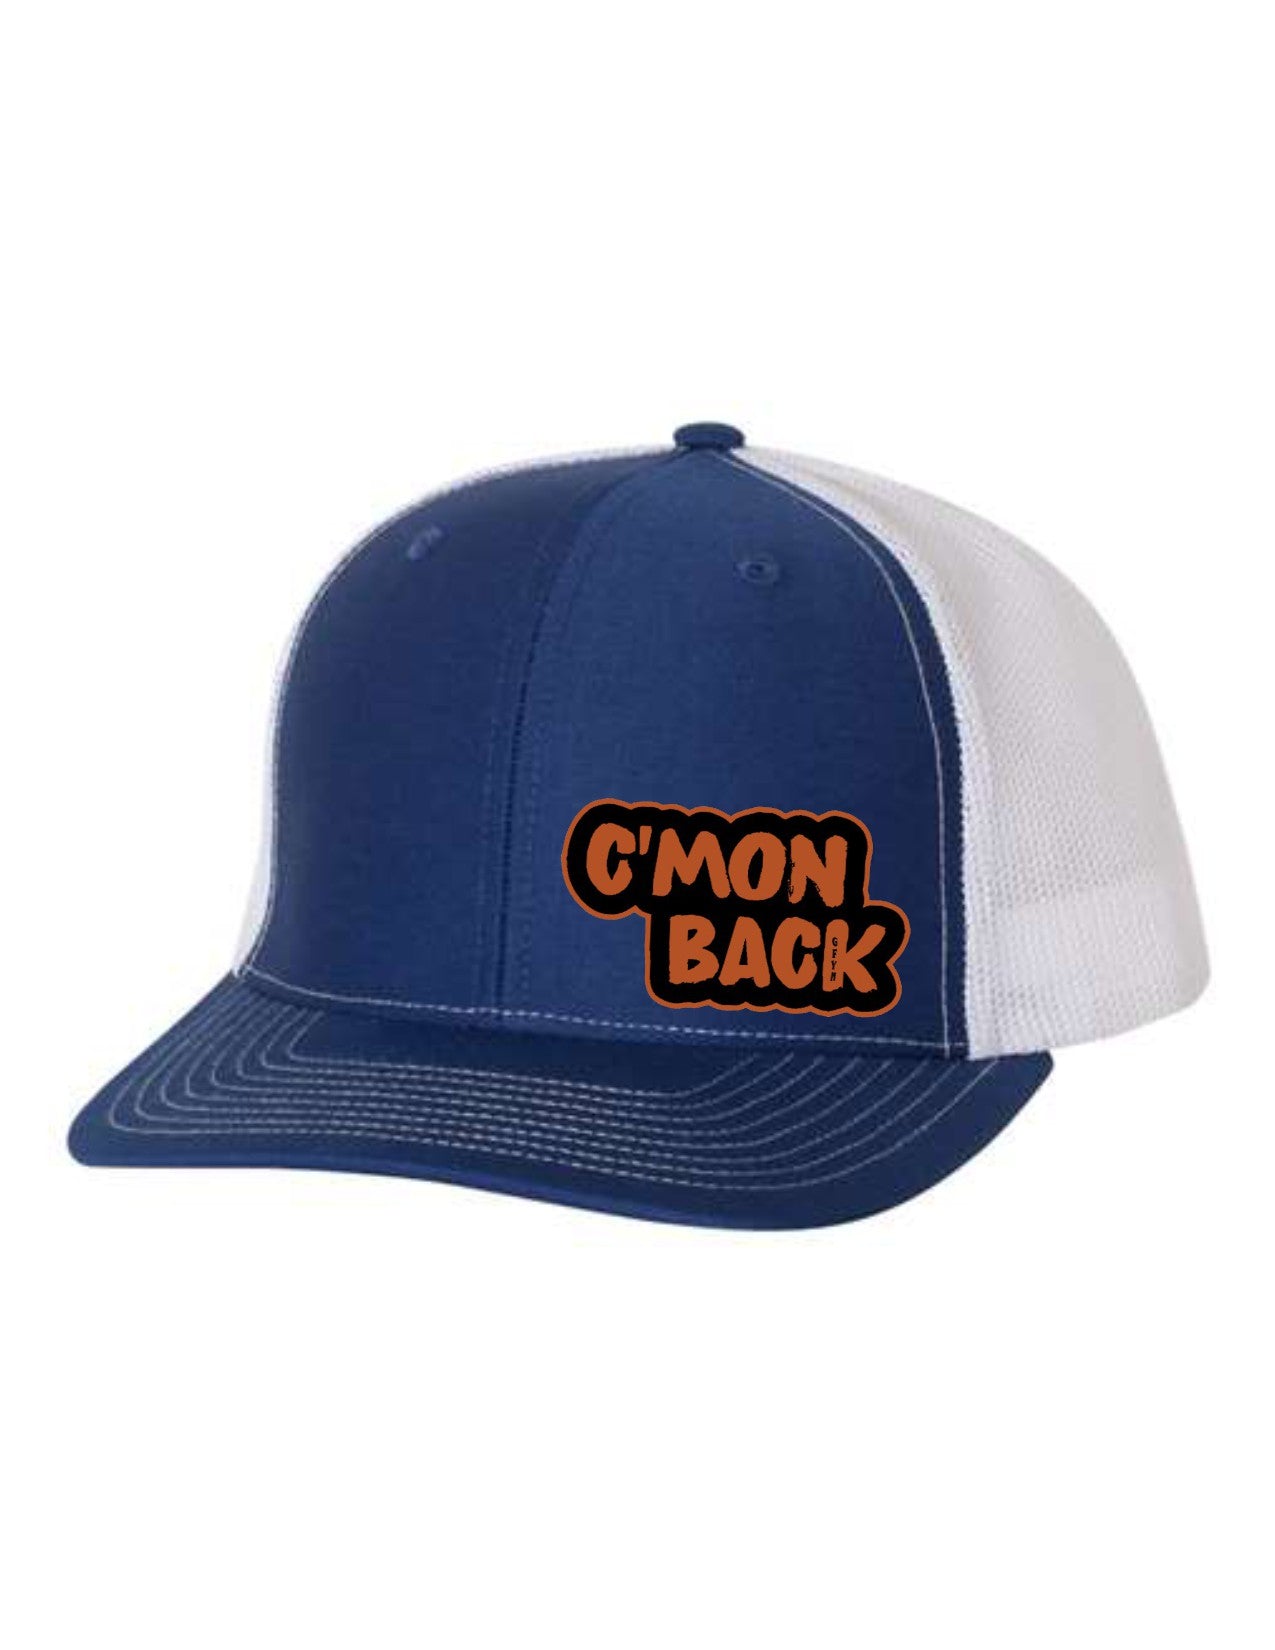 C'MON BACK Leather Patch Richardson 112 Trucker Hat